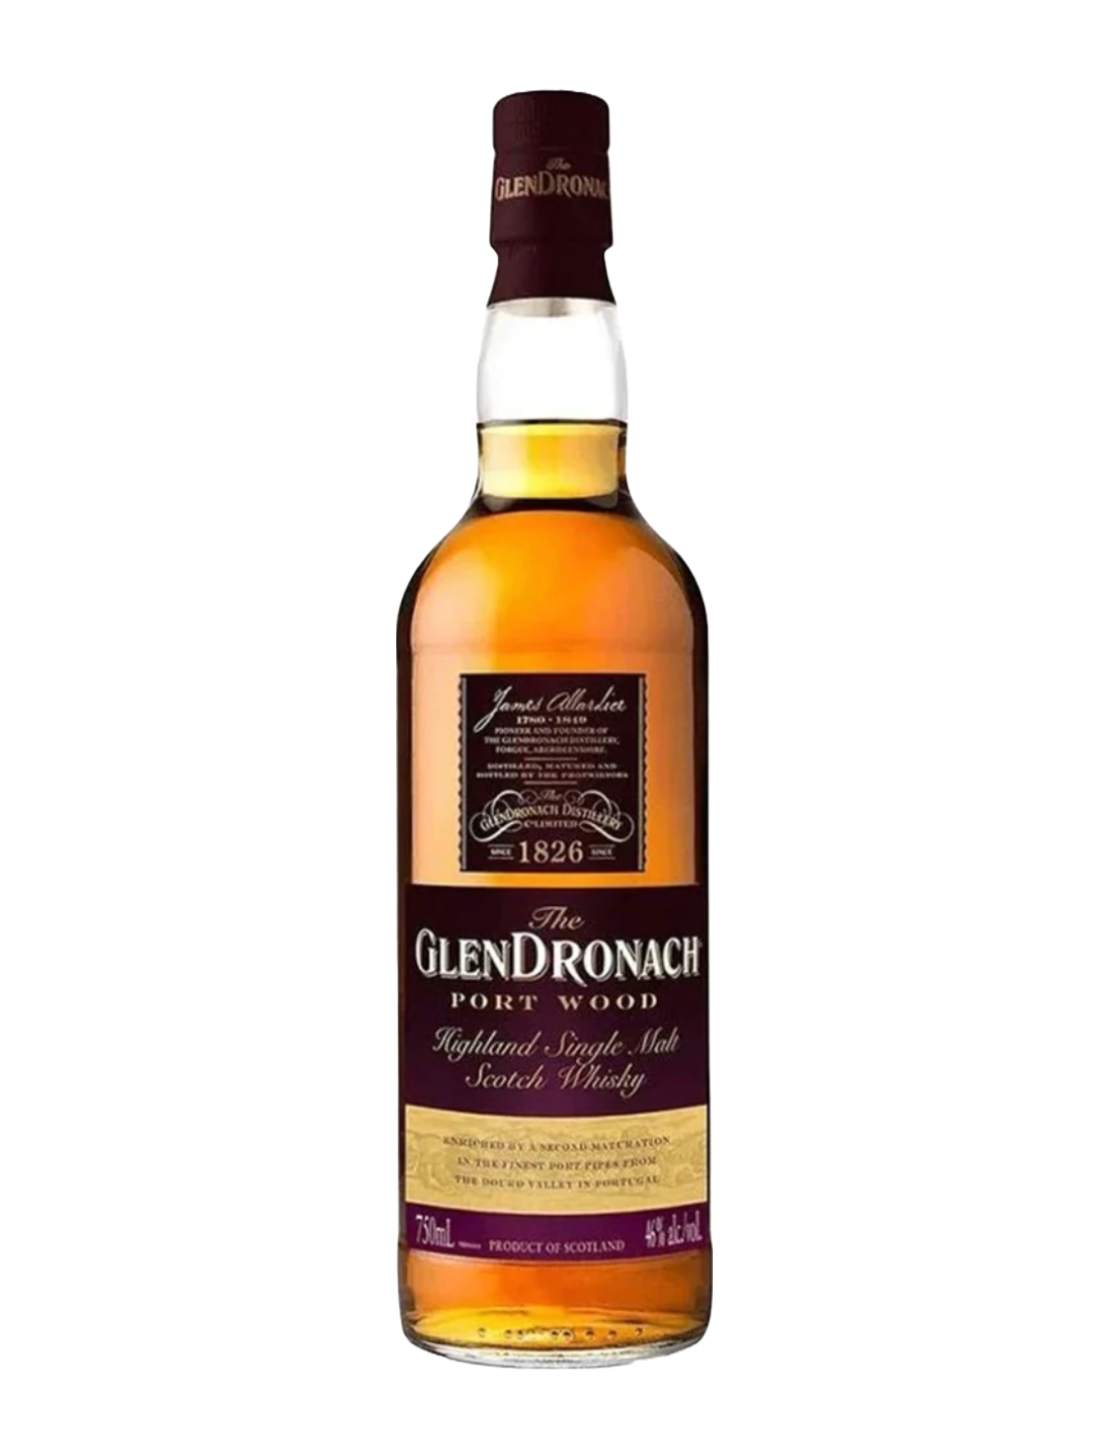 An elegant bottle of Glendronach Portwood Finish Single Malt Scotch Whiskey in front of a plain white background